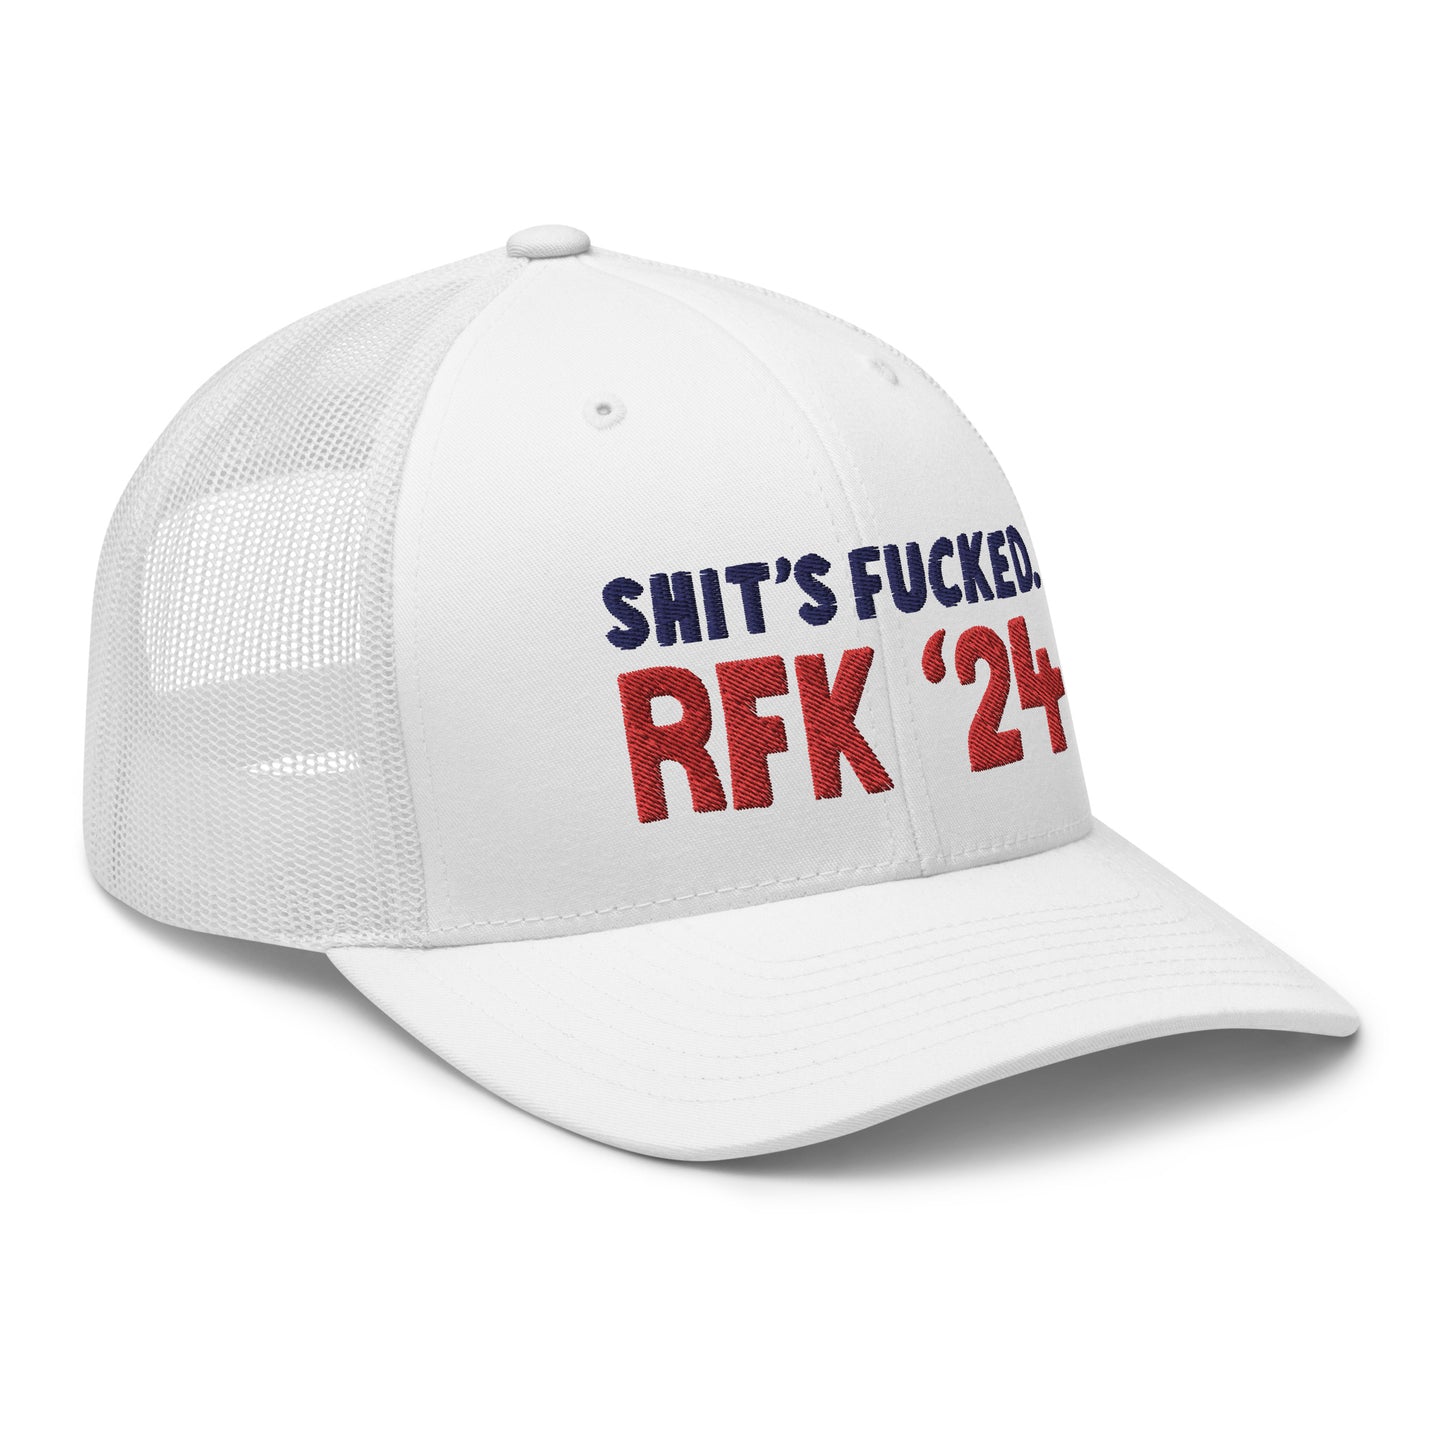 RFK hilarious joke hat, hilarious clothing and apparel store image, political clothing, biden jokes, trump jokes